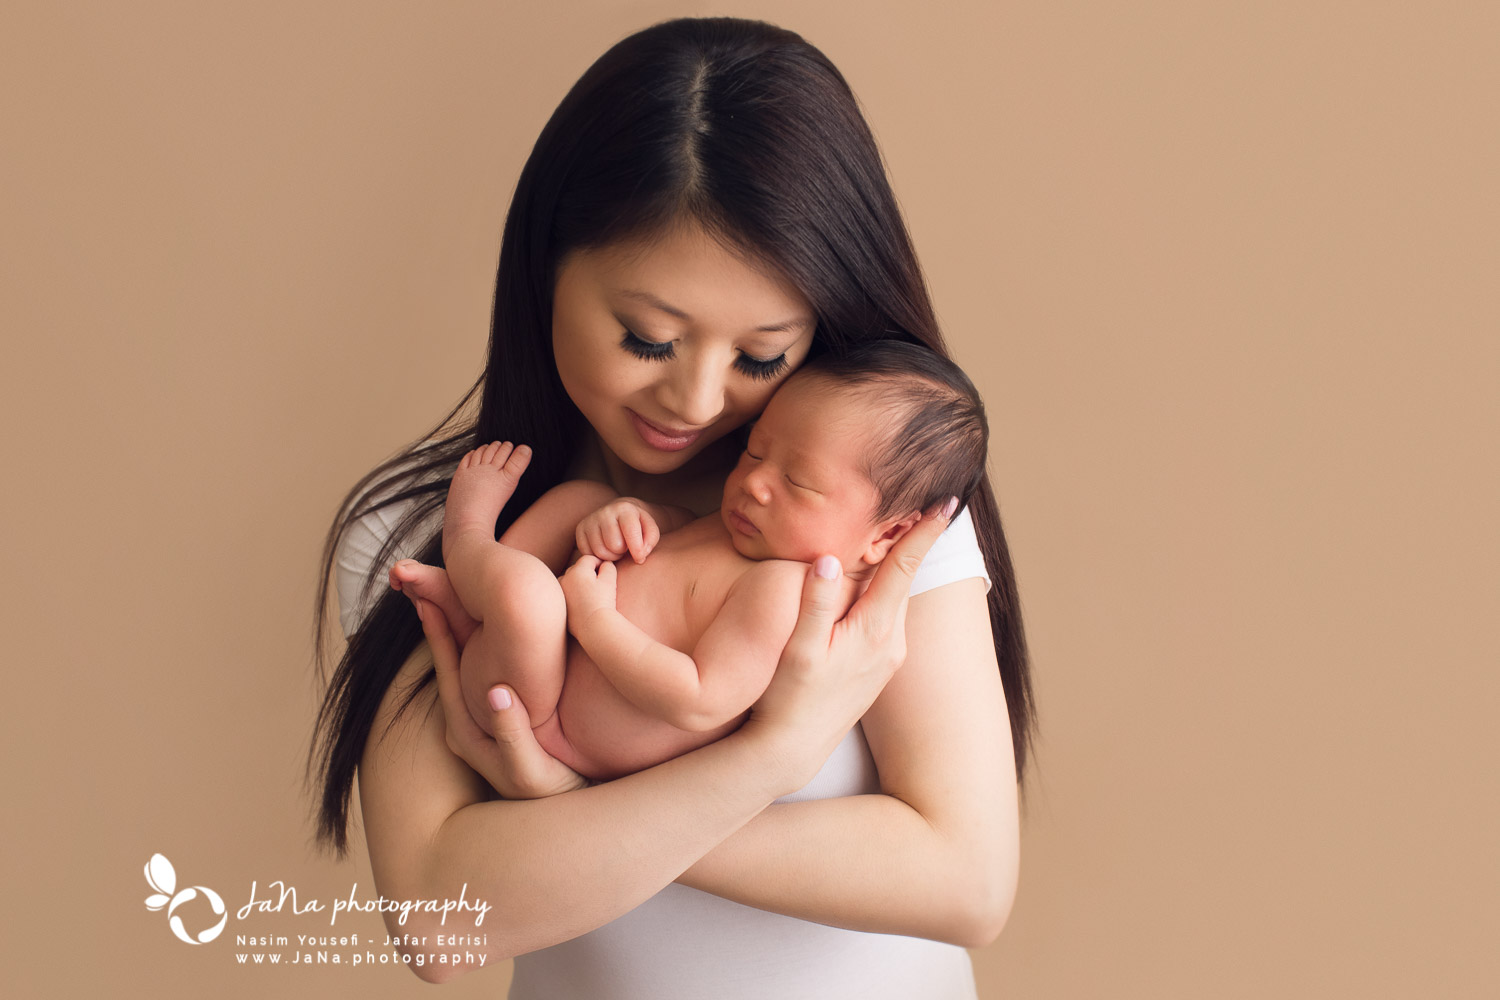 Newborn photography Vancouver - Mom and newborn